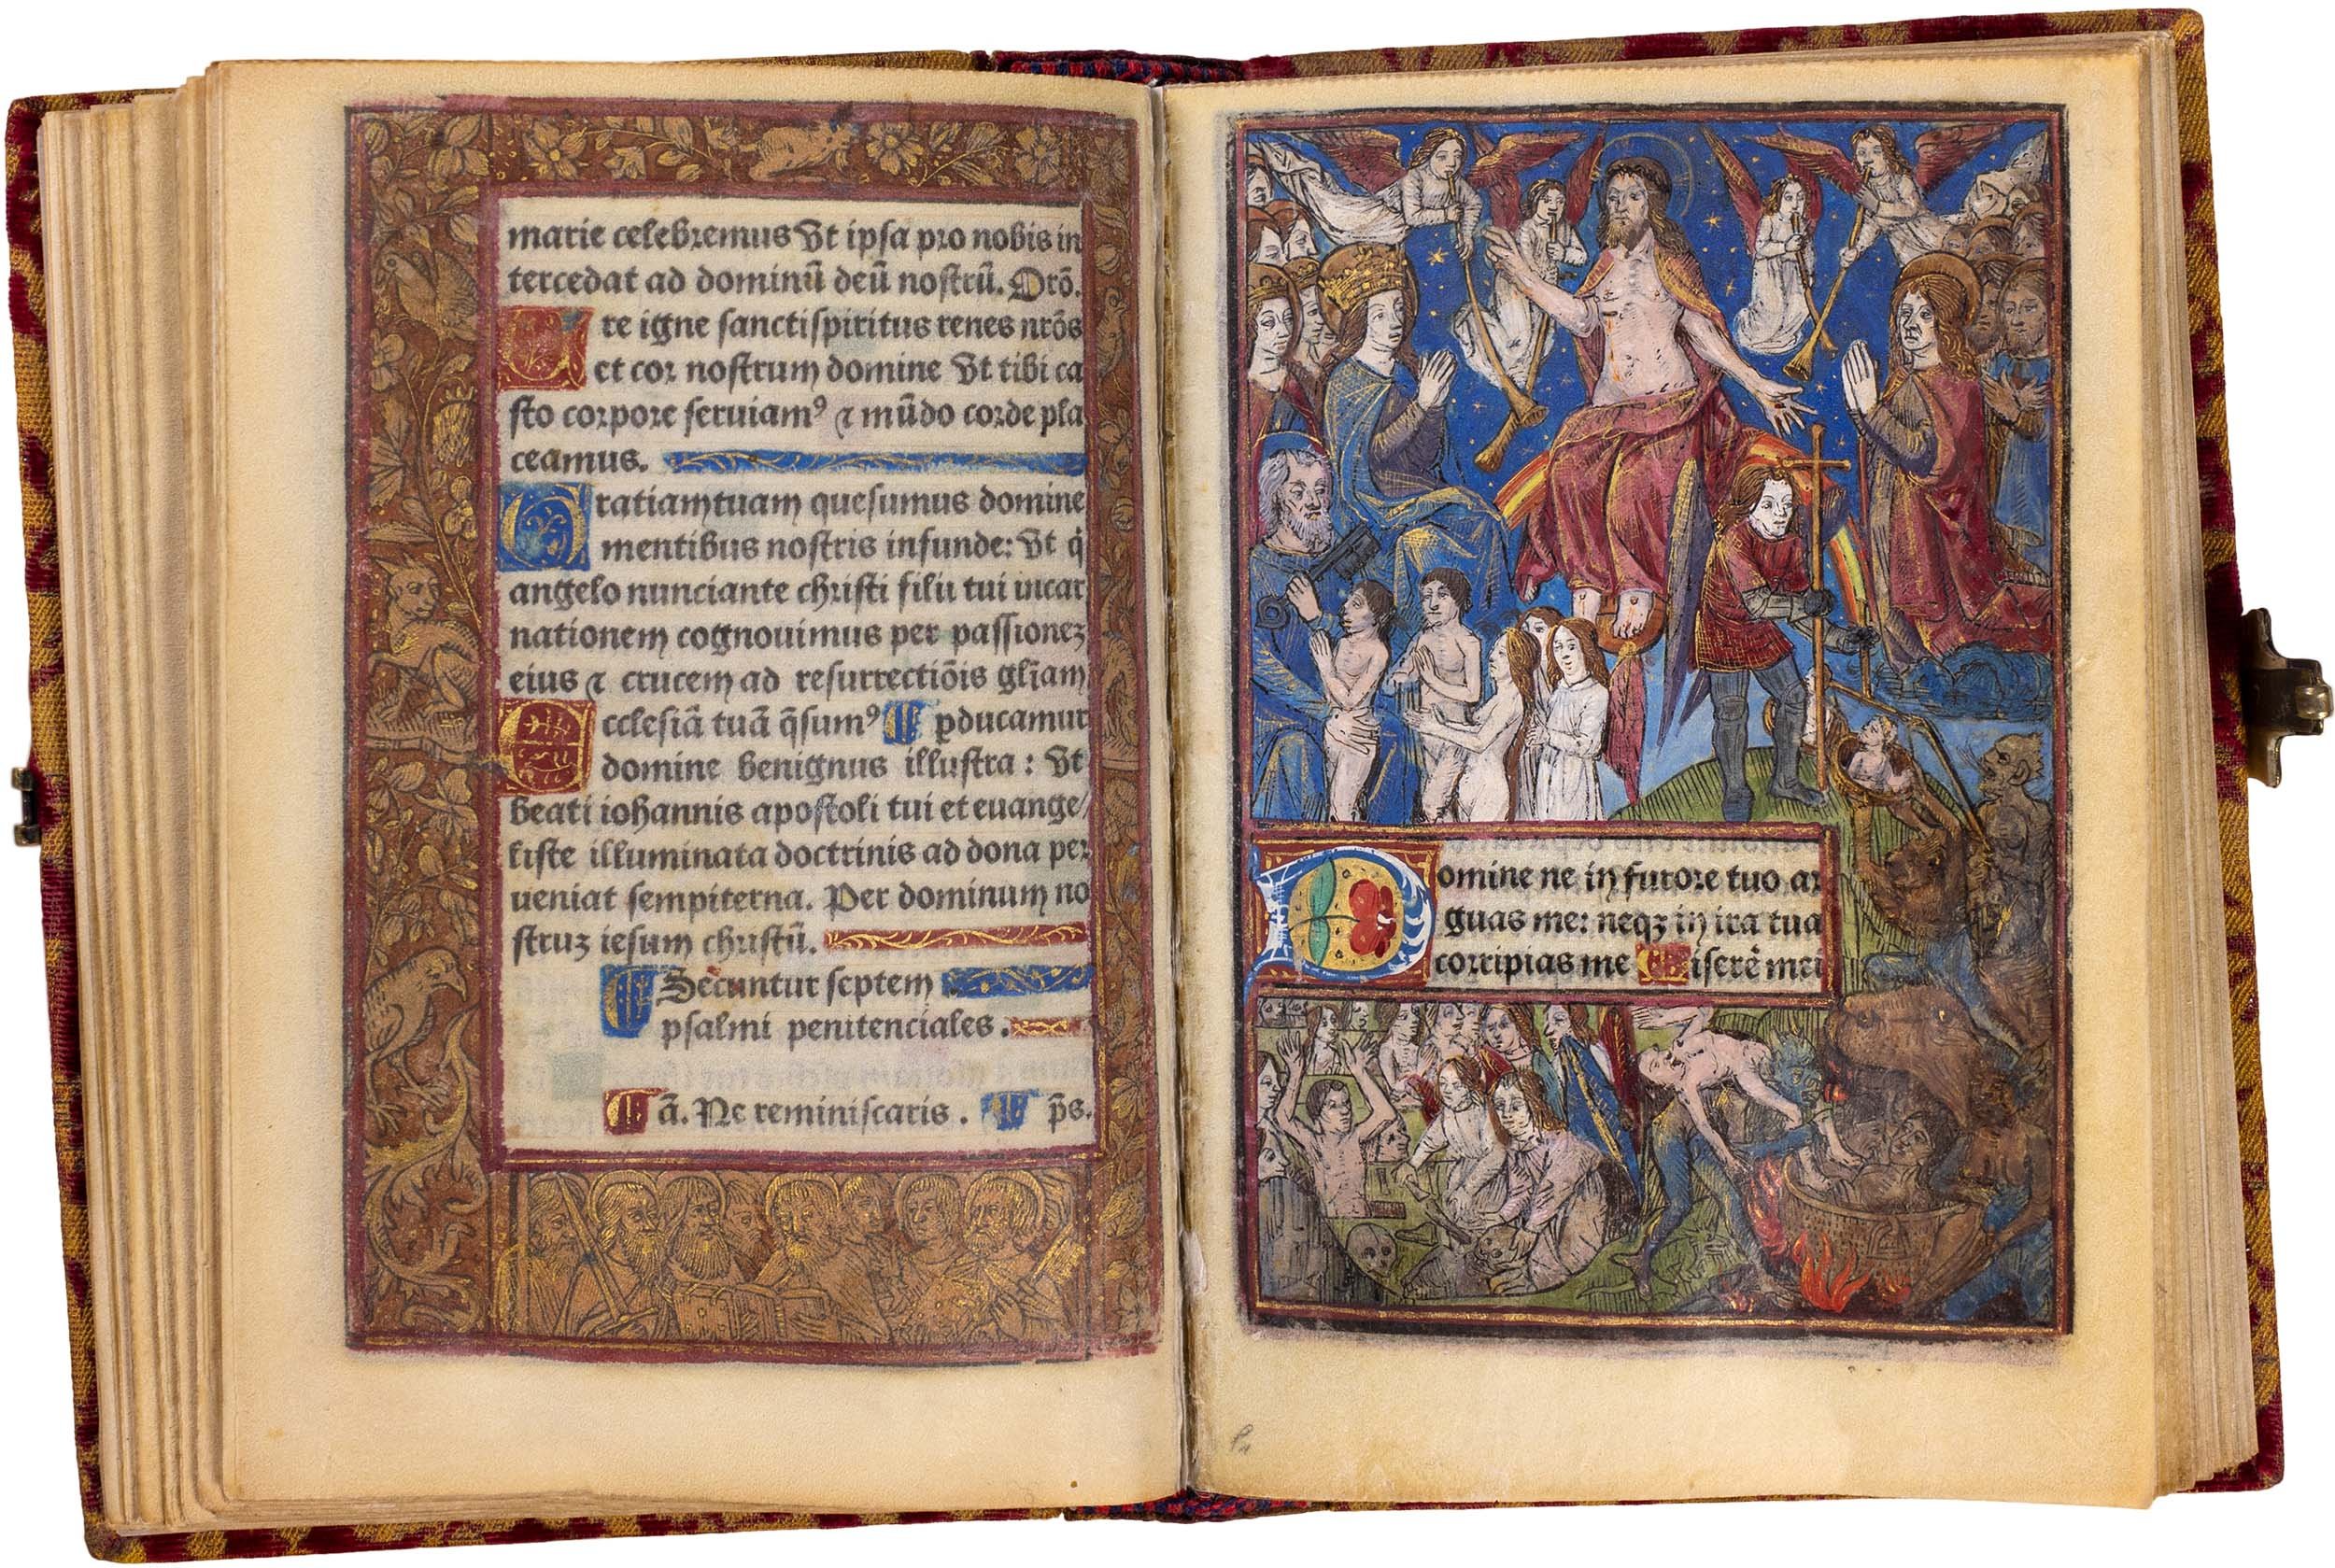 Horae-bmv-1488-gamma-dupre-printed-book-of-hours-danse-macabre-camaieu-dor-illuminated-vellum-copy-64.jpg